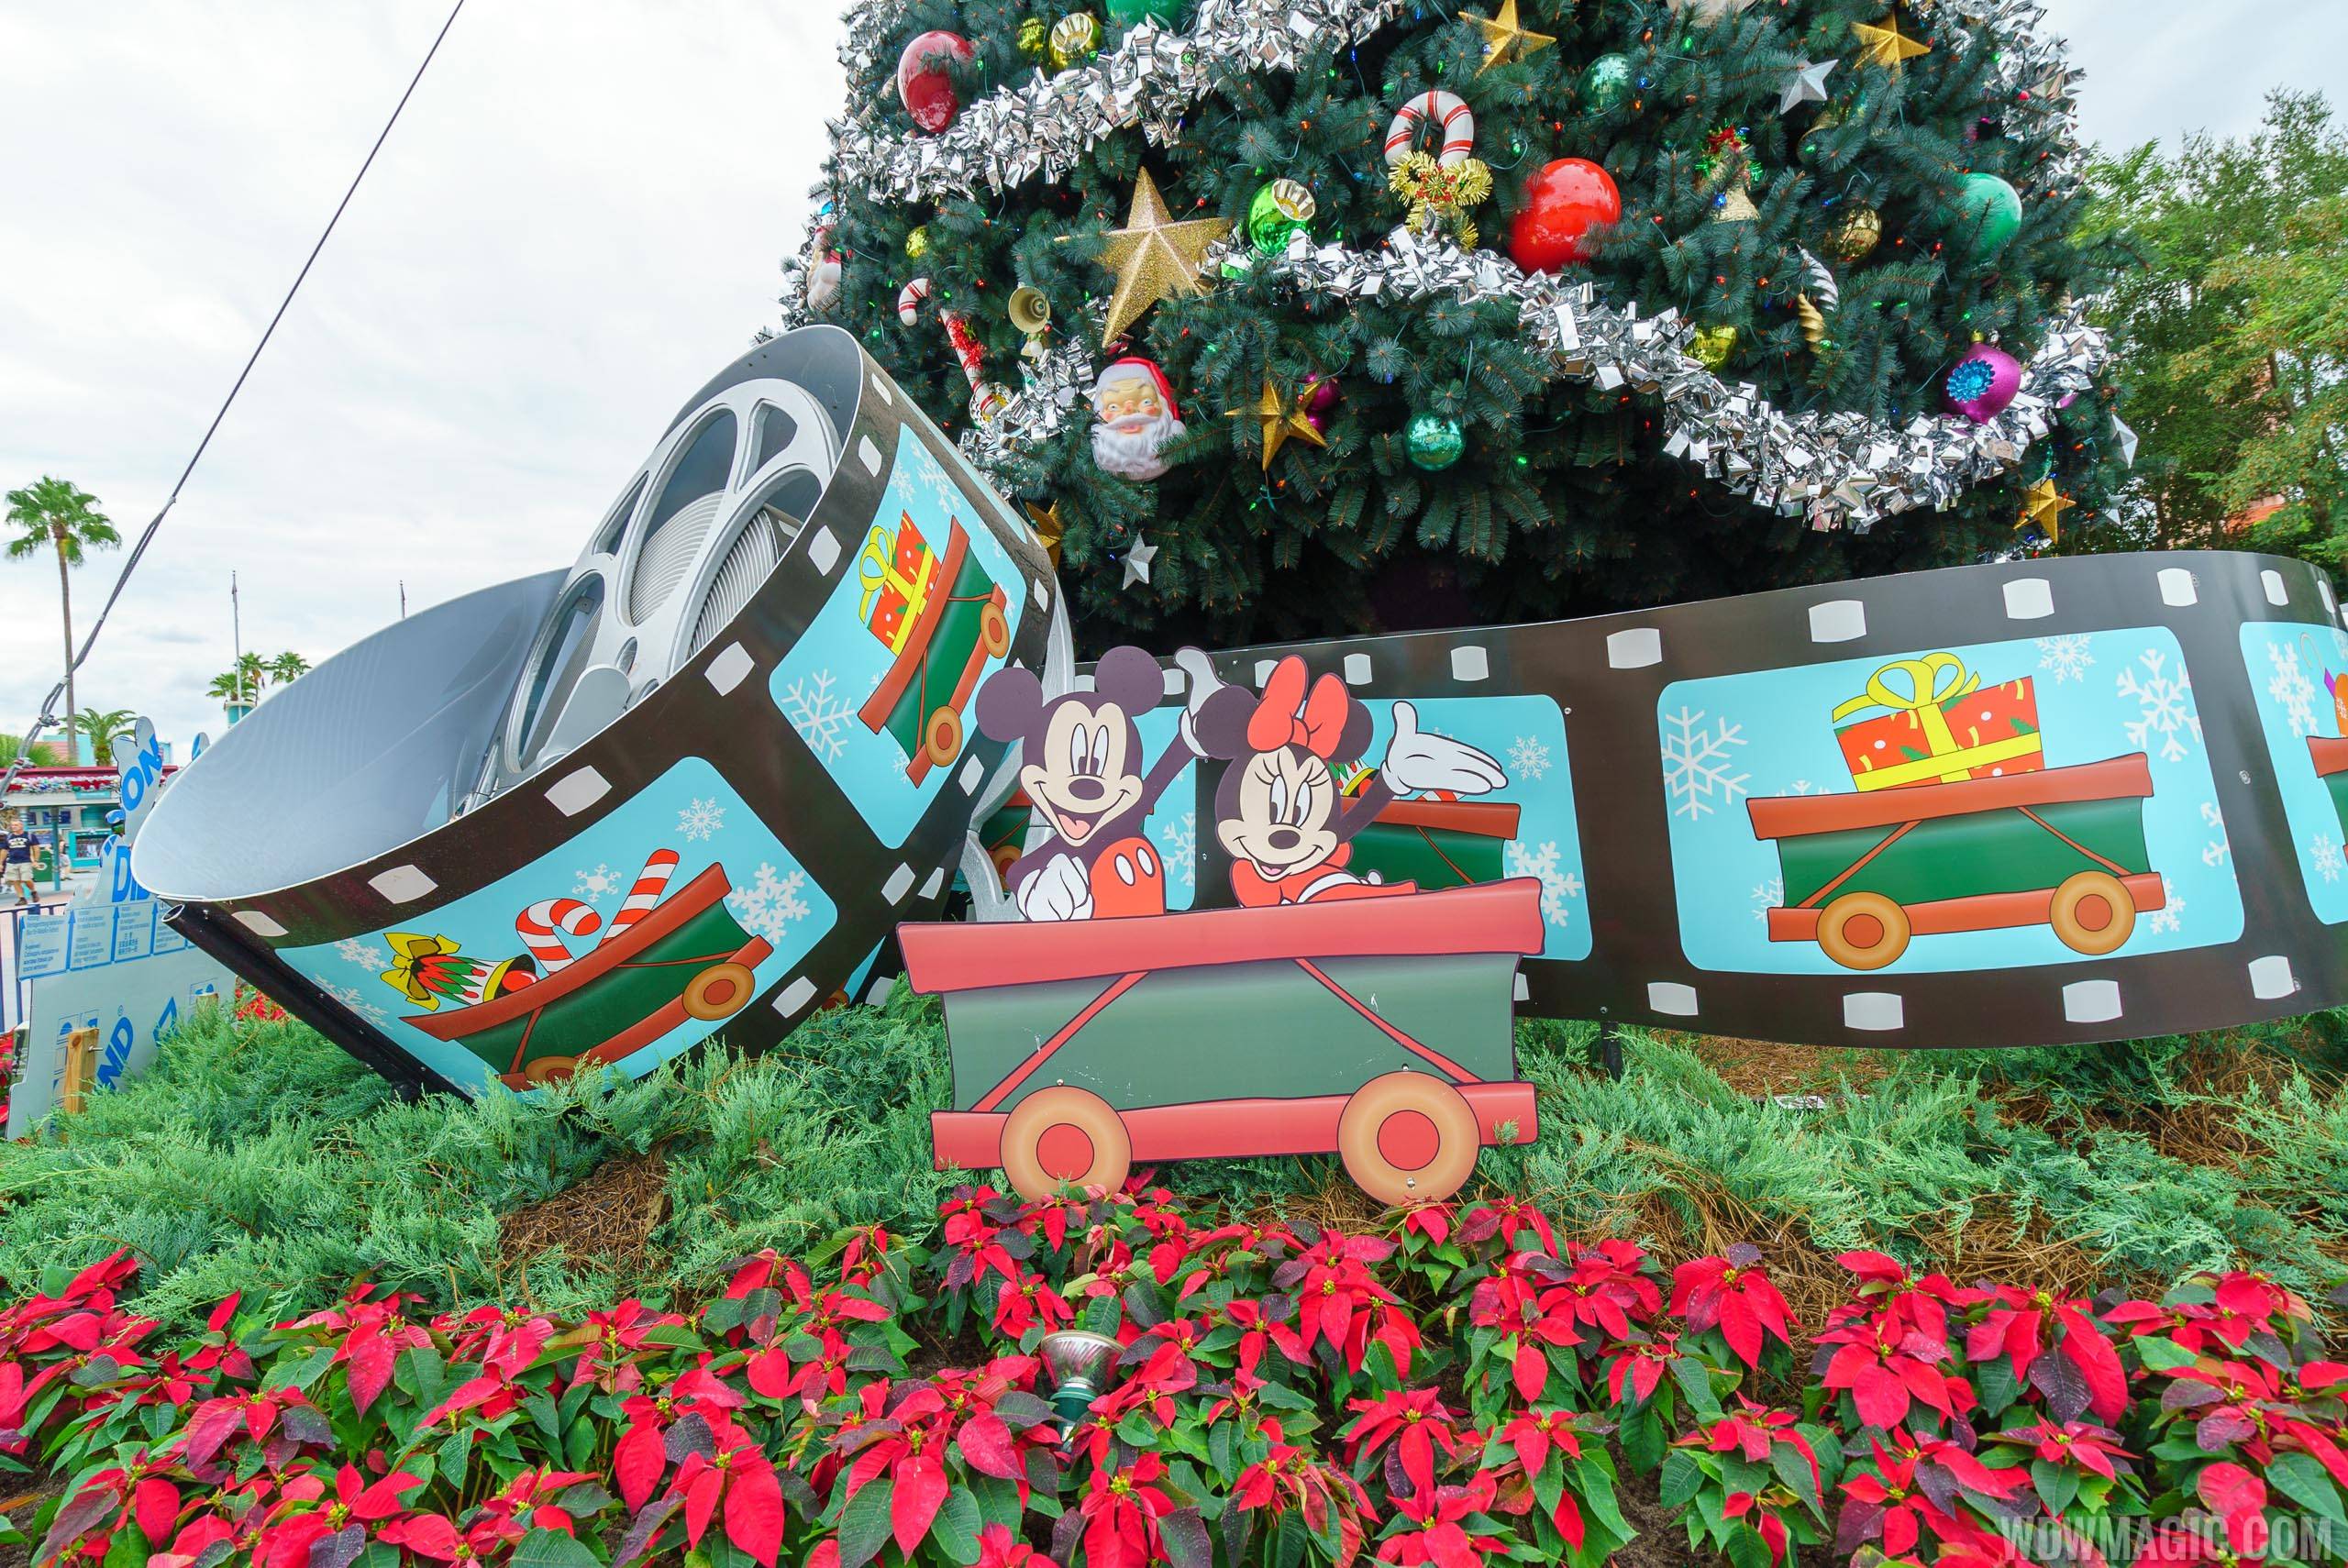 Disney's Hollywood Studios holiday decorations 2016